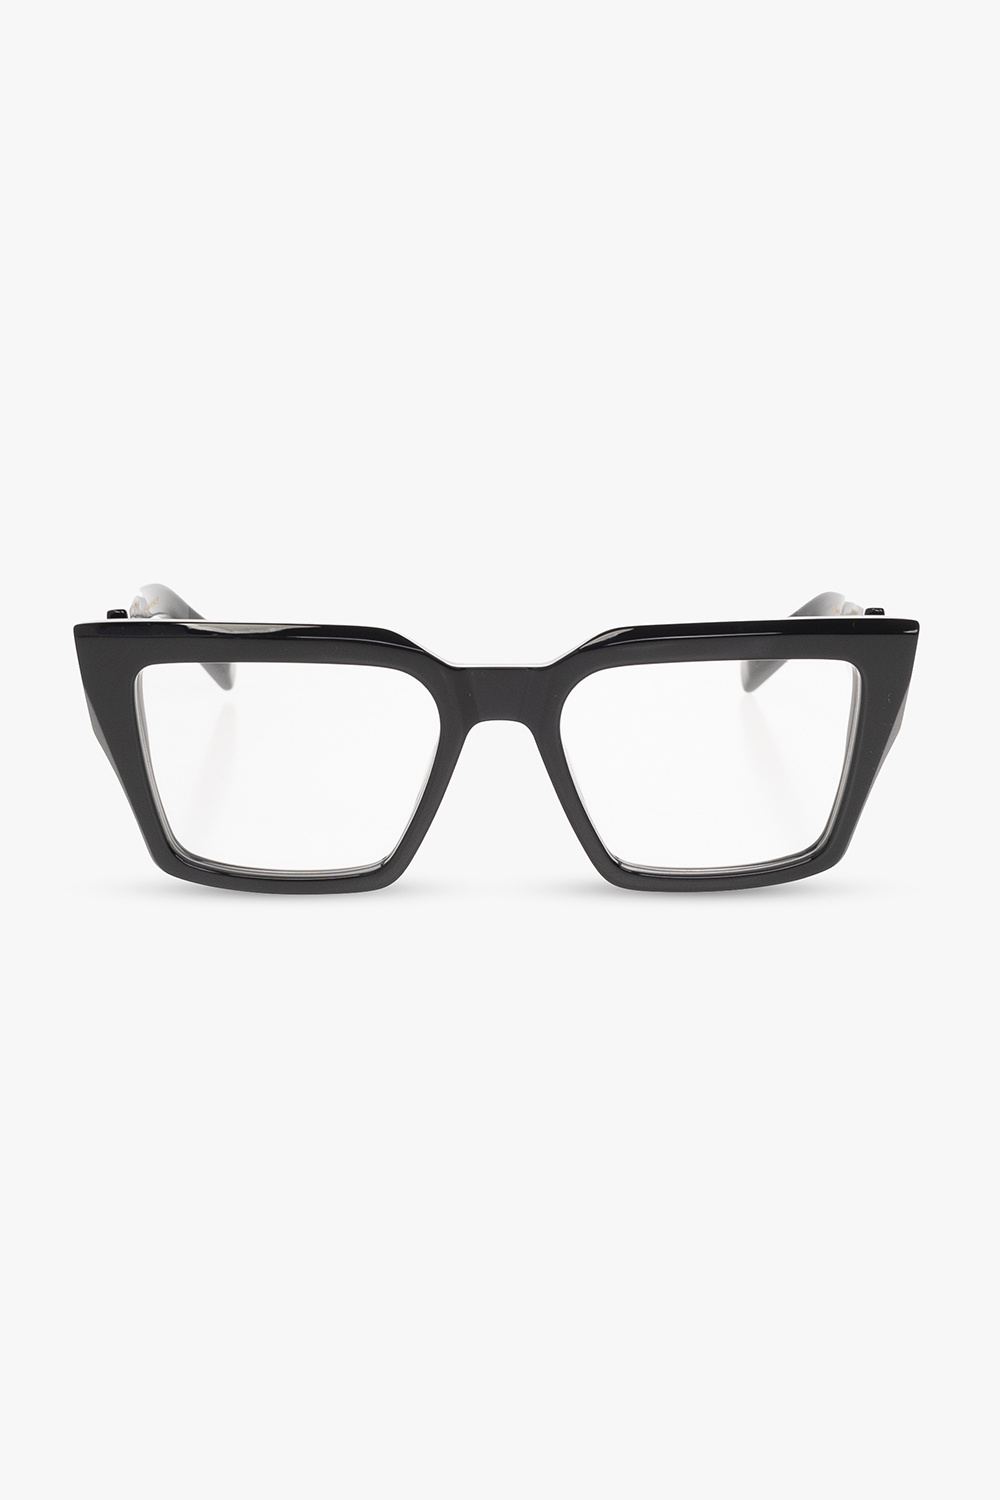 Balmain ‘Formee’ optical glasses